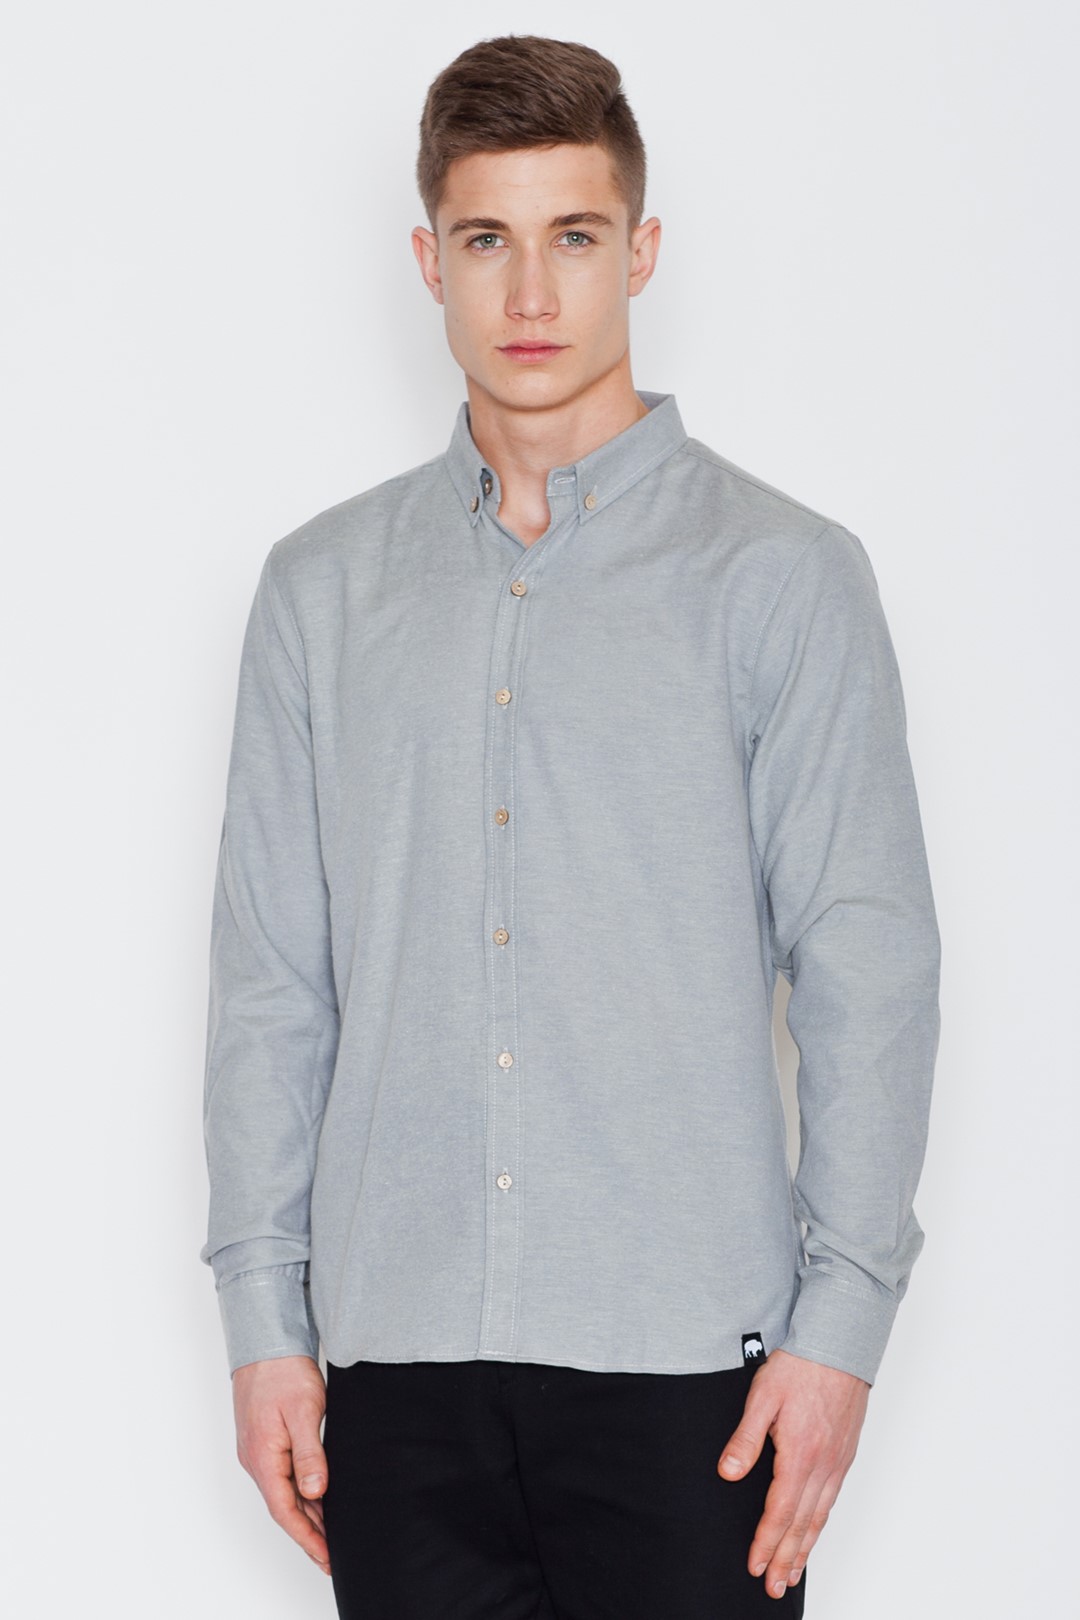 Shirt V019 Grey XL